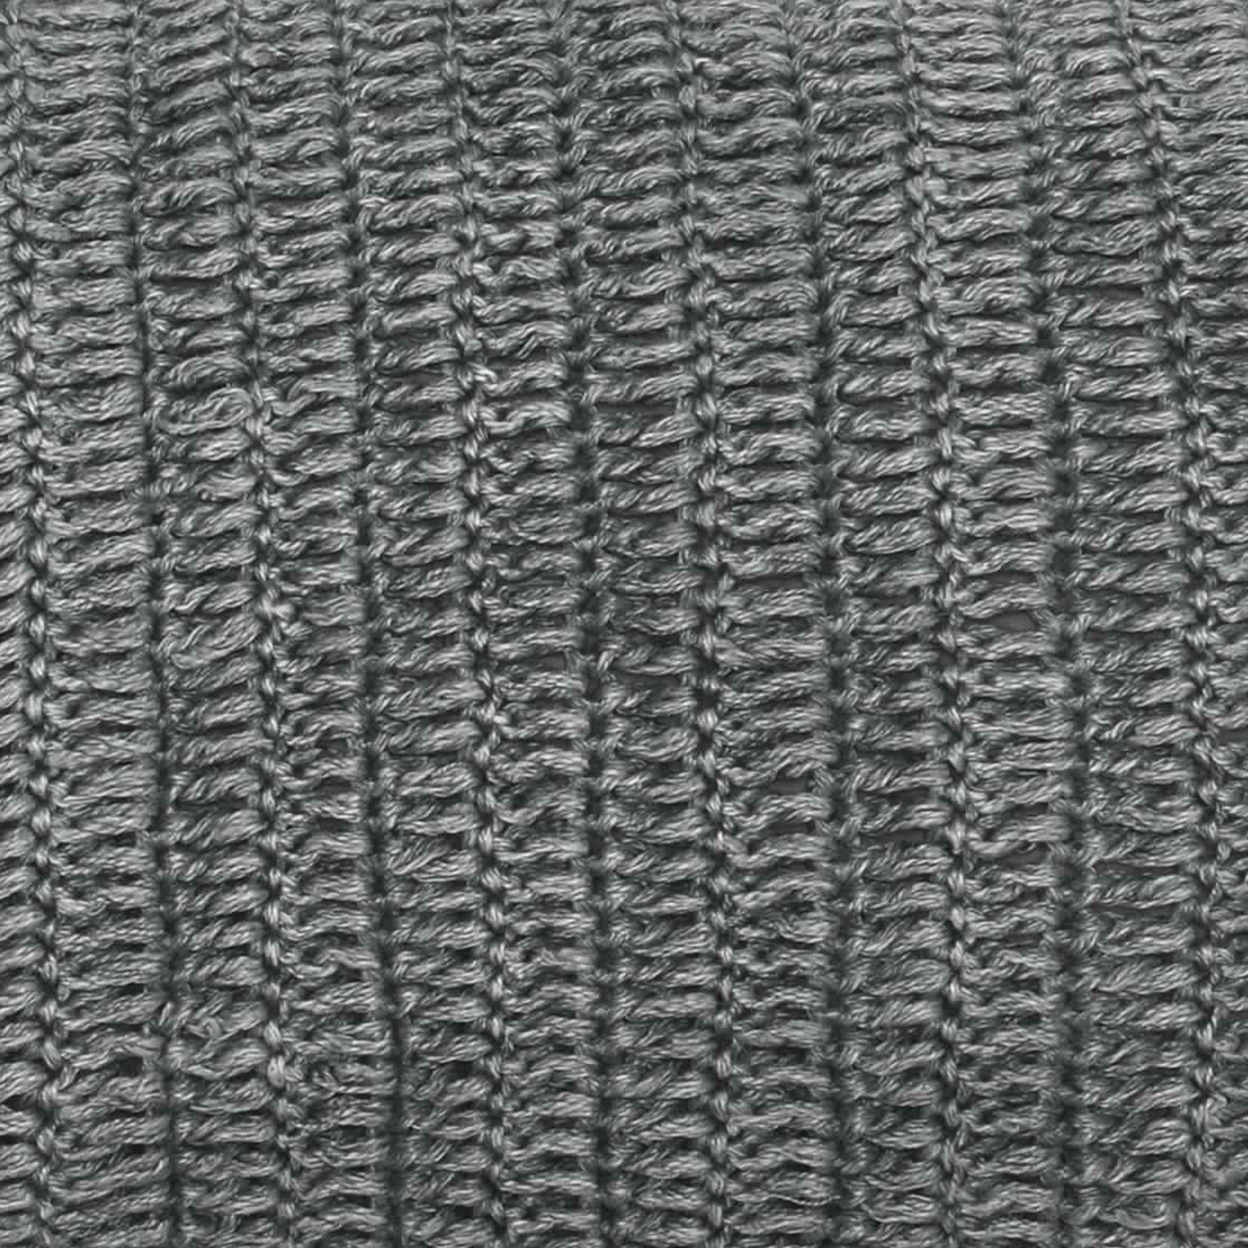 Rectangular Fabric Throw Pillow With Hand Knitted Details, Gray- Saltoro Sherpi